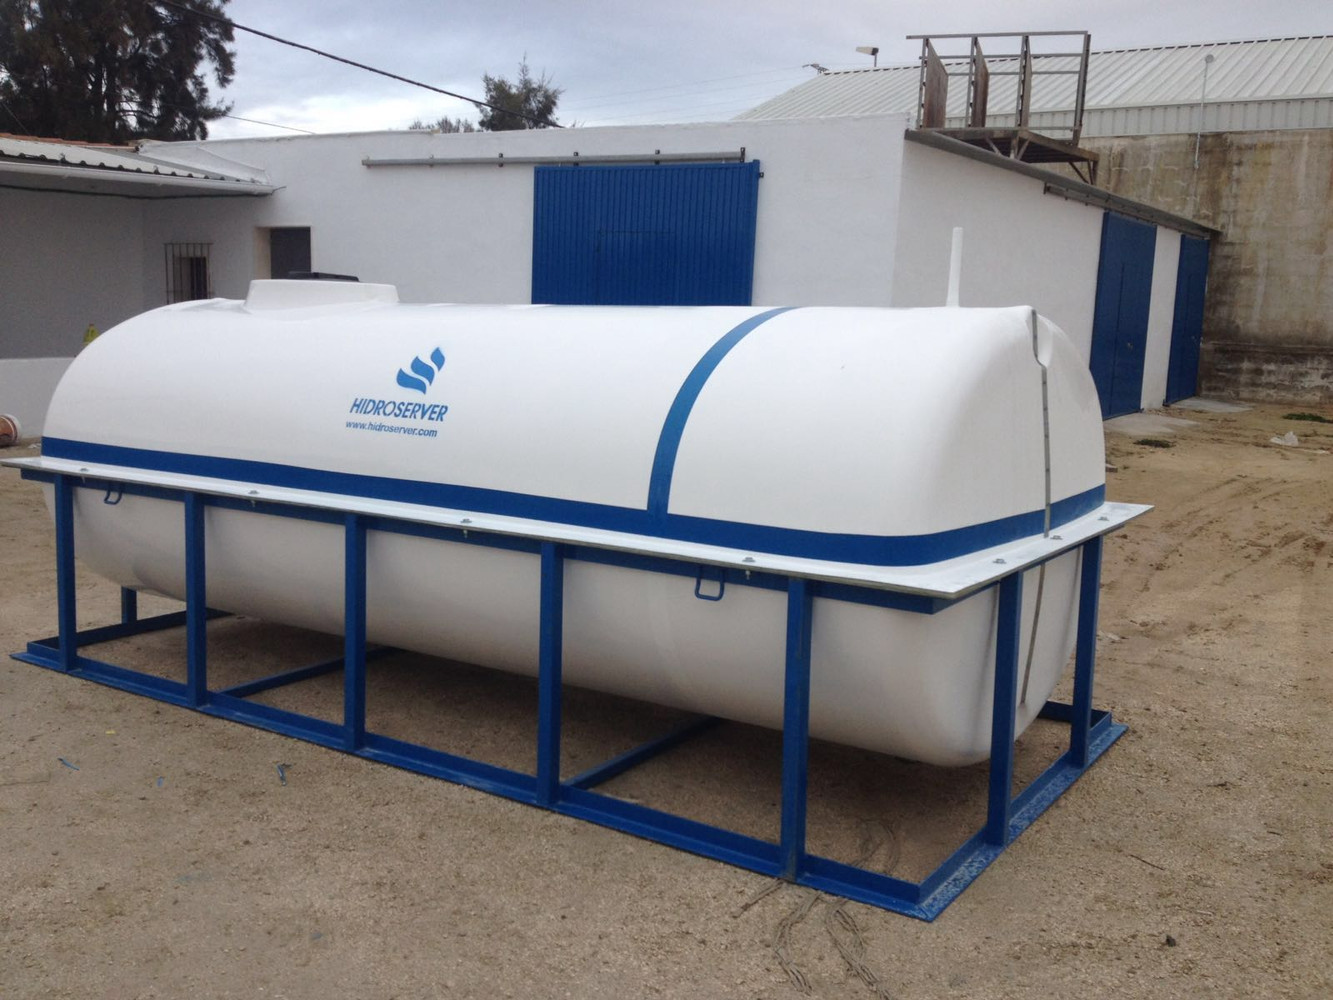 Depósito de agua en poliéster 1500 litros